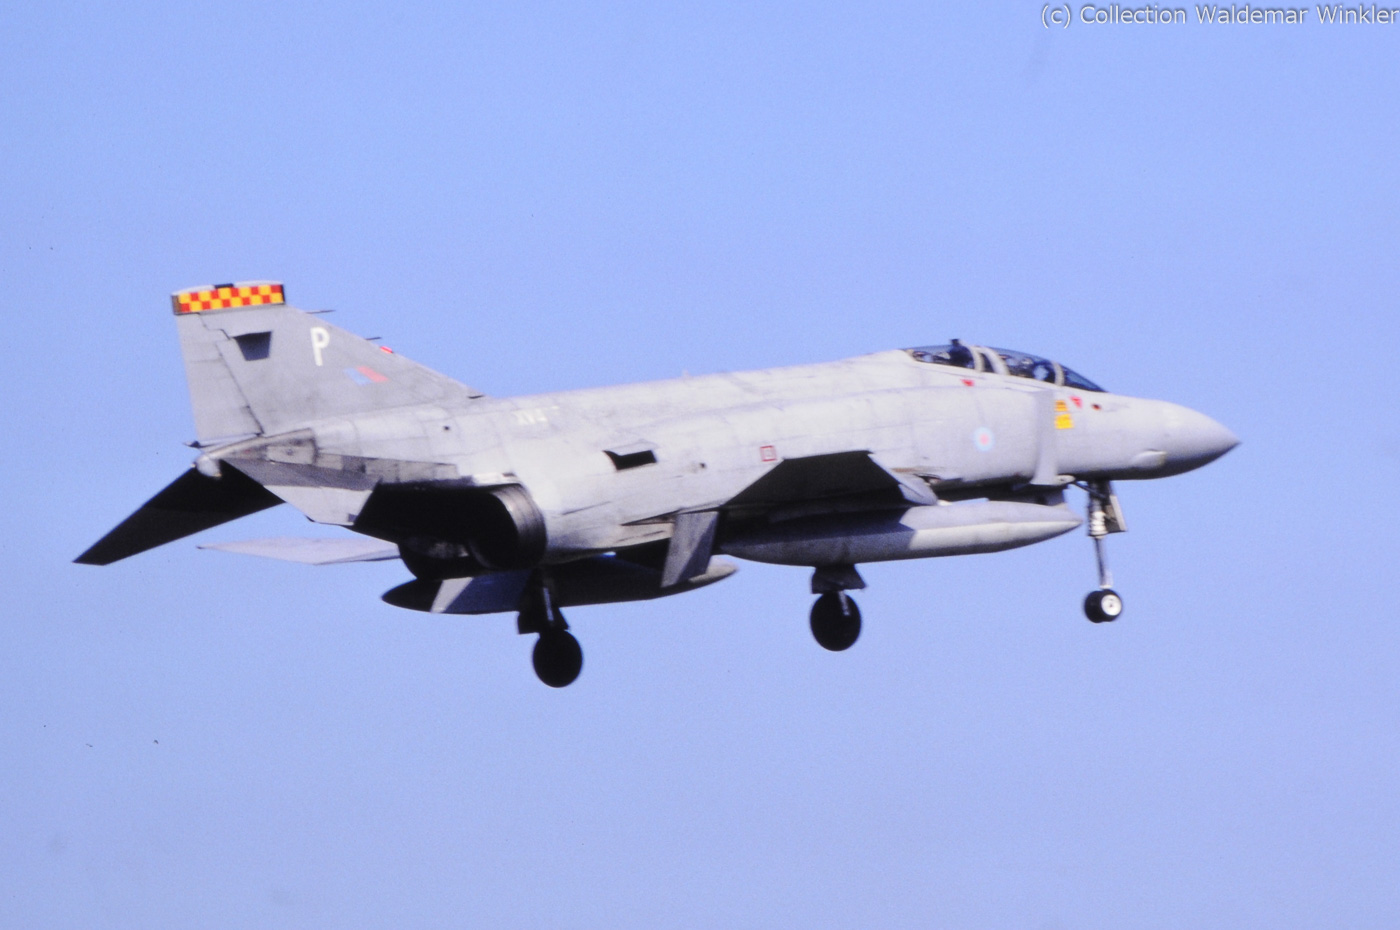 F-4_Phantom_II_DSC_2246.jpg